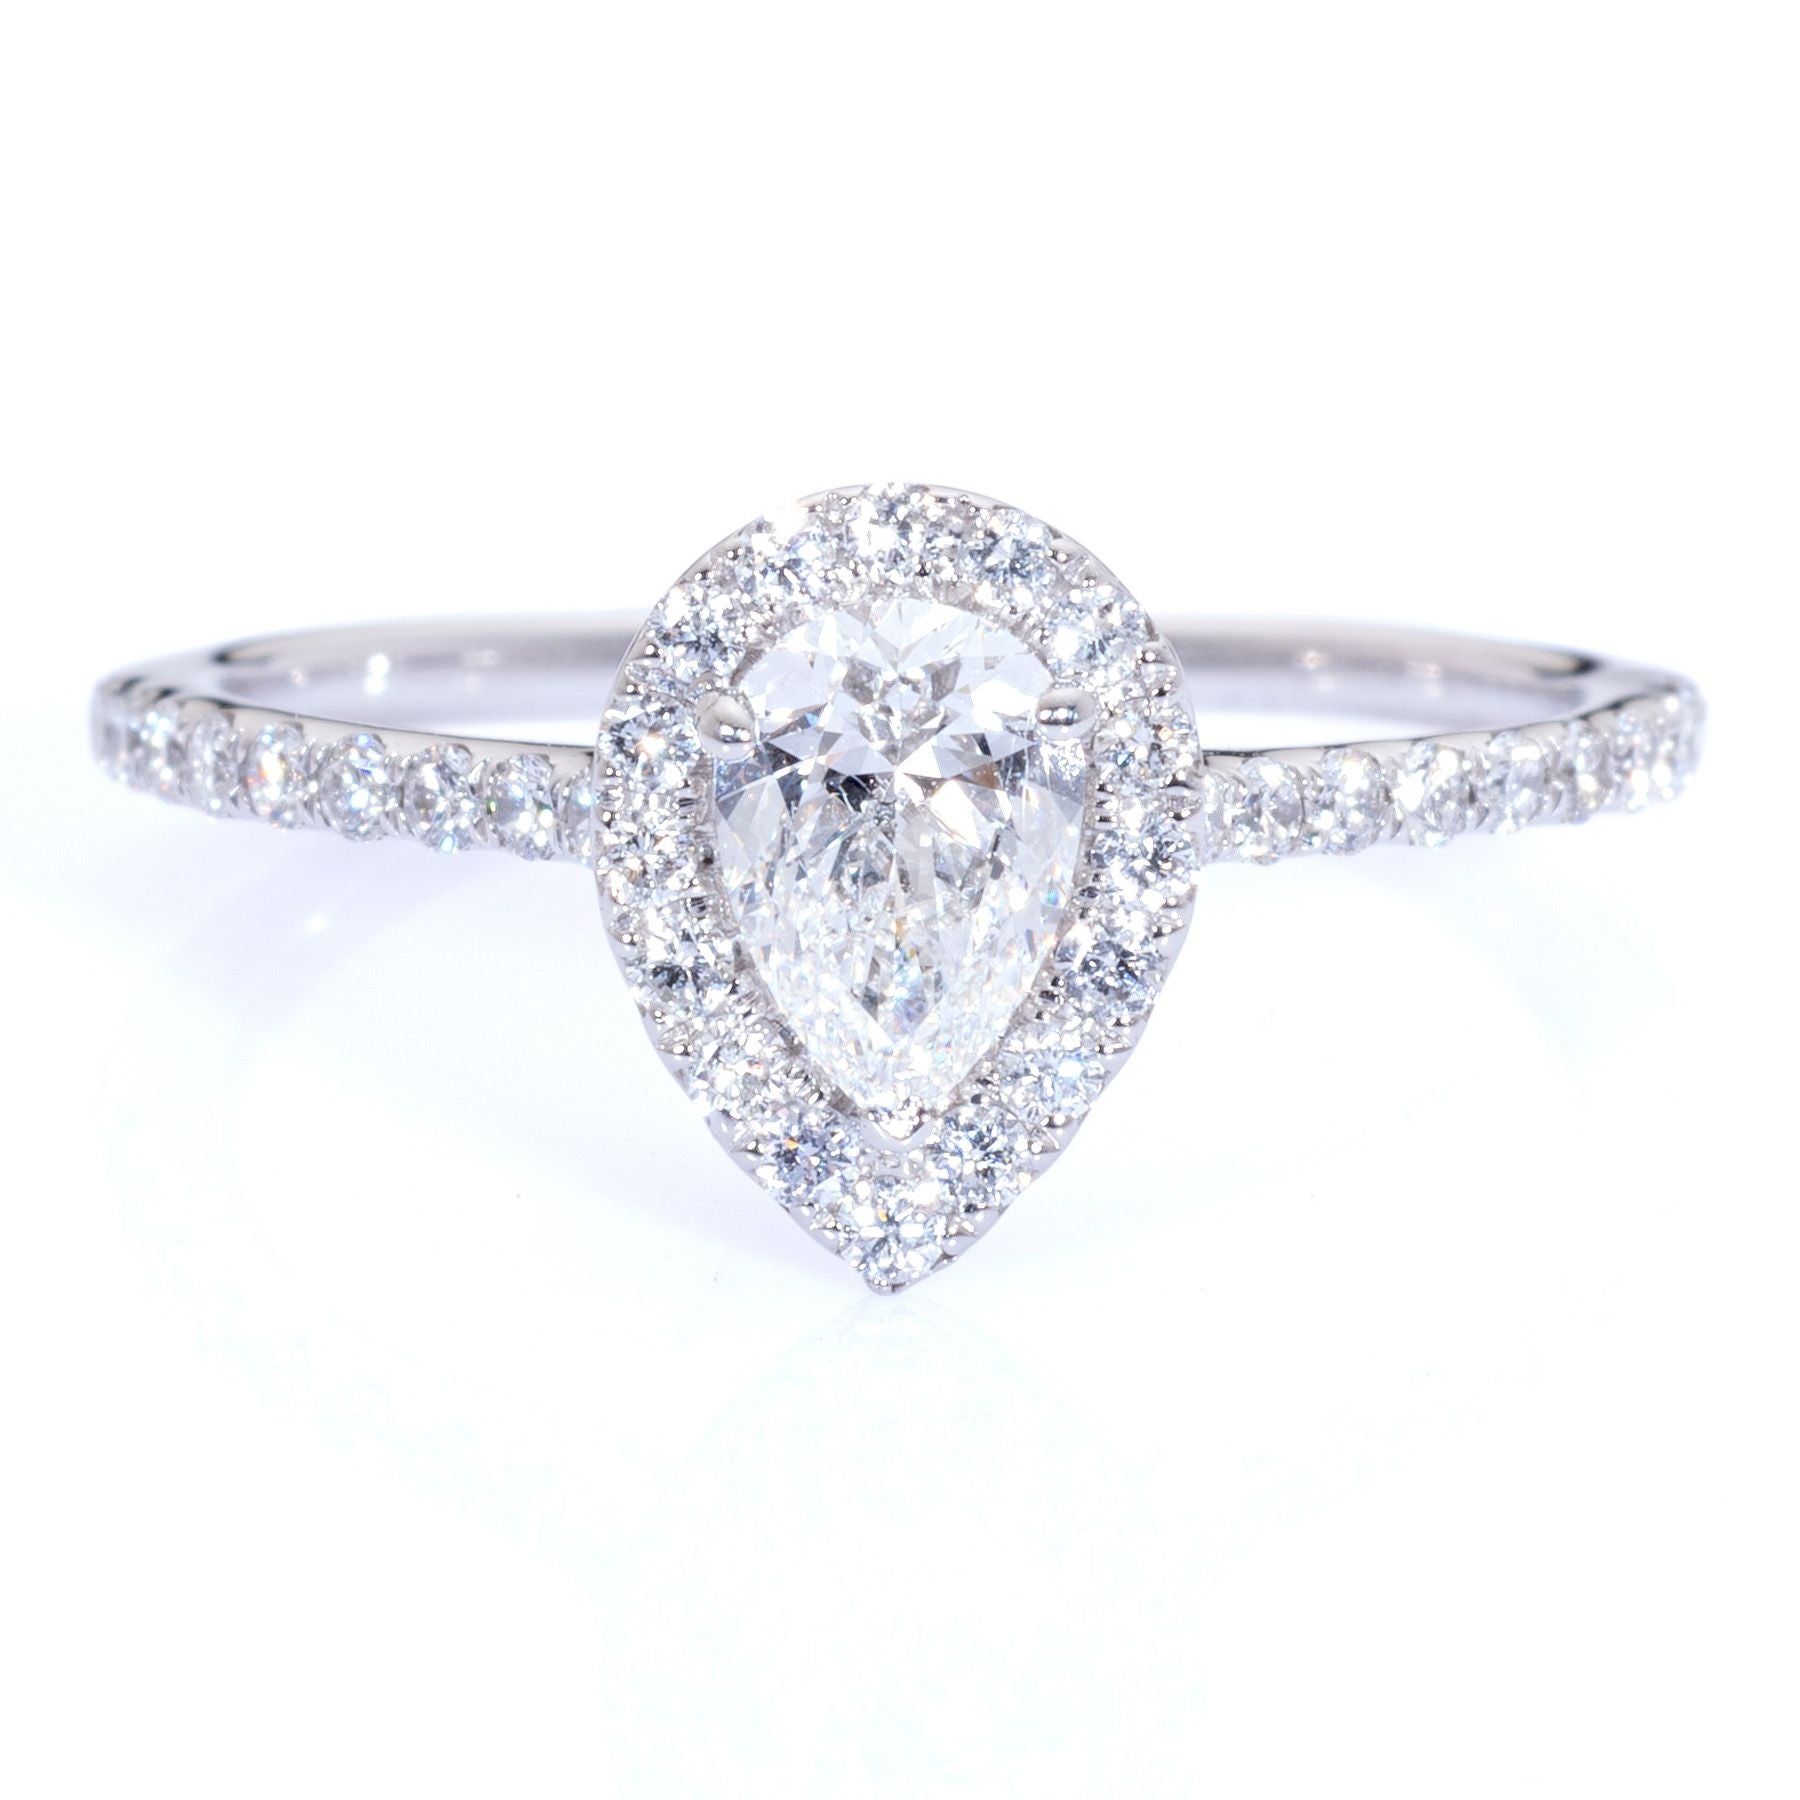 Pear shaped diamond engagement ring diamond halo platinum Harrogate jewellers Fogal and barnes 